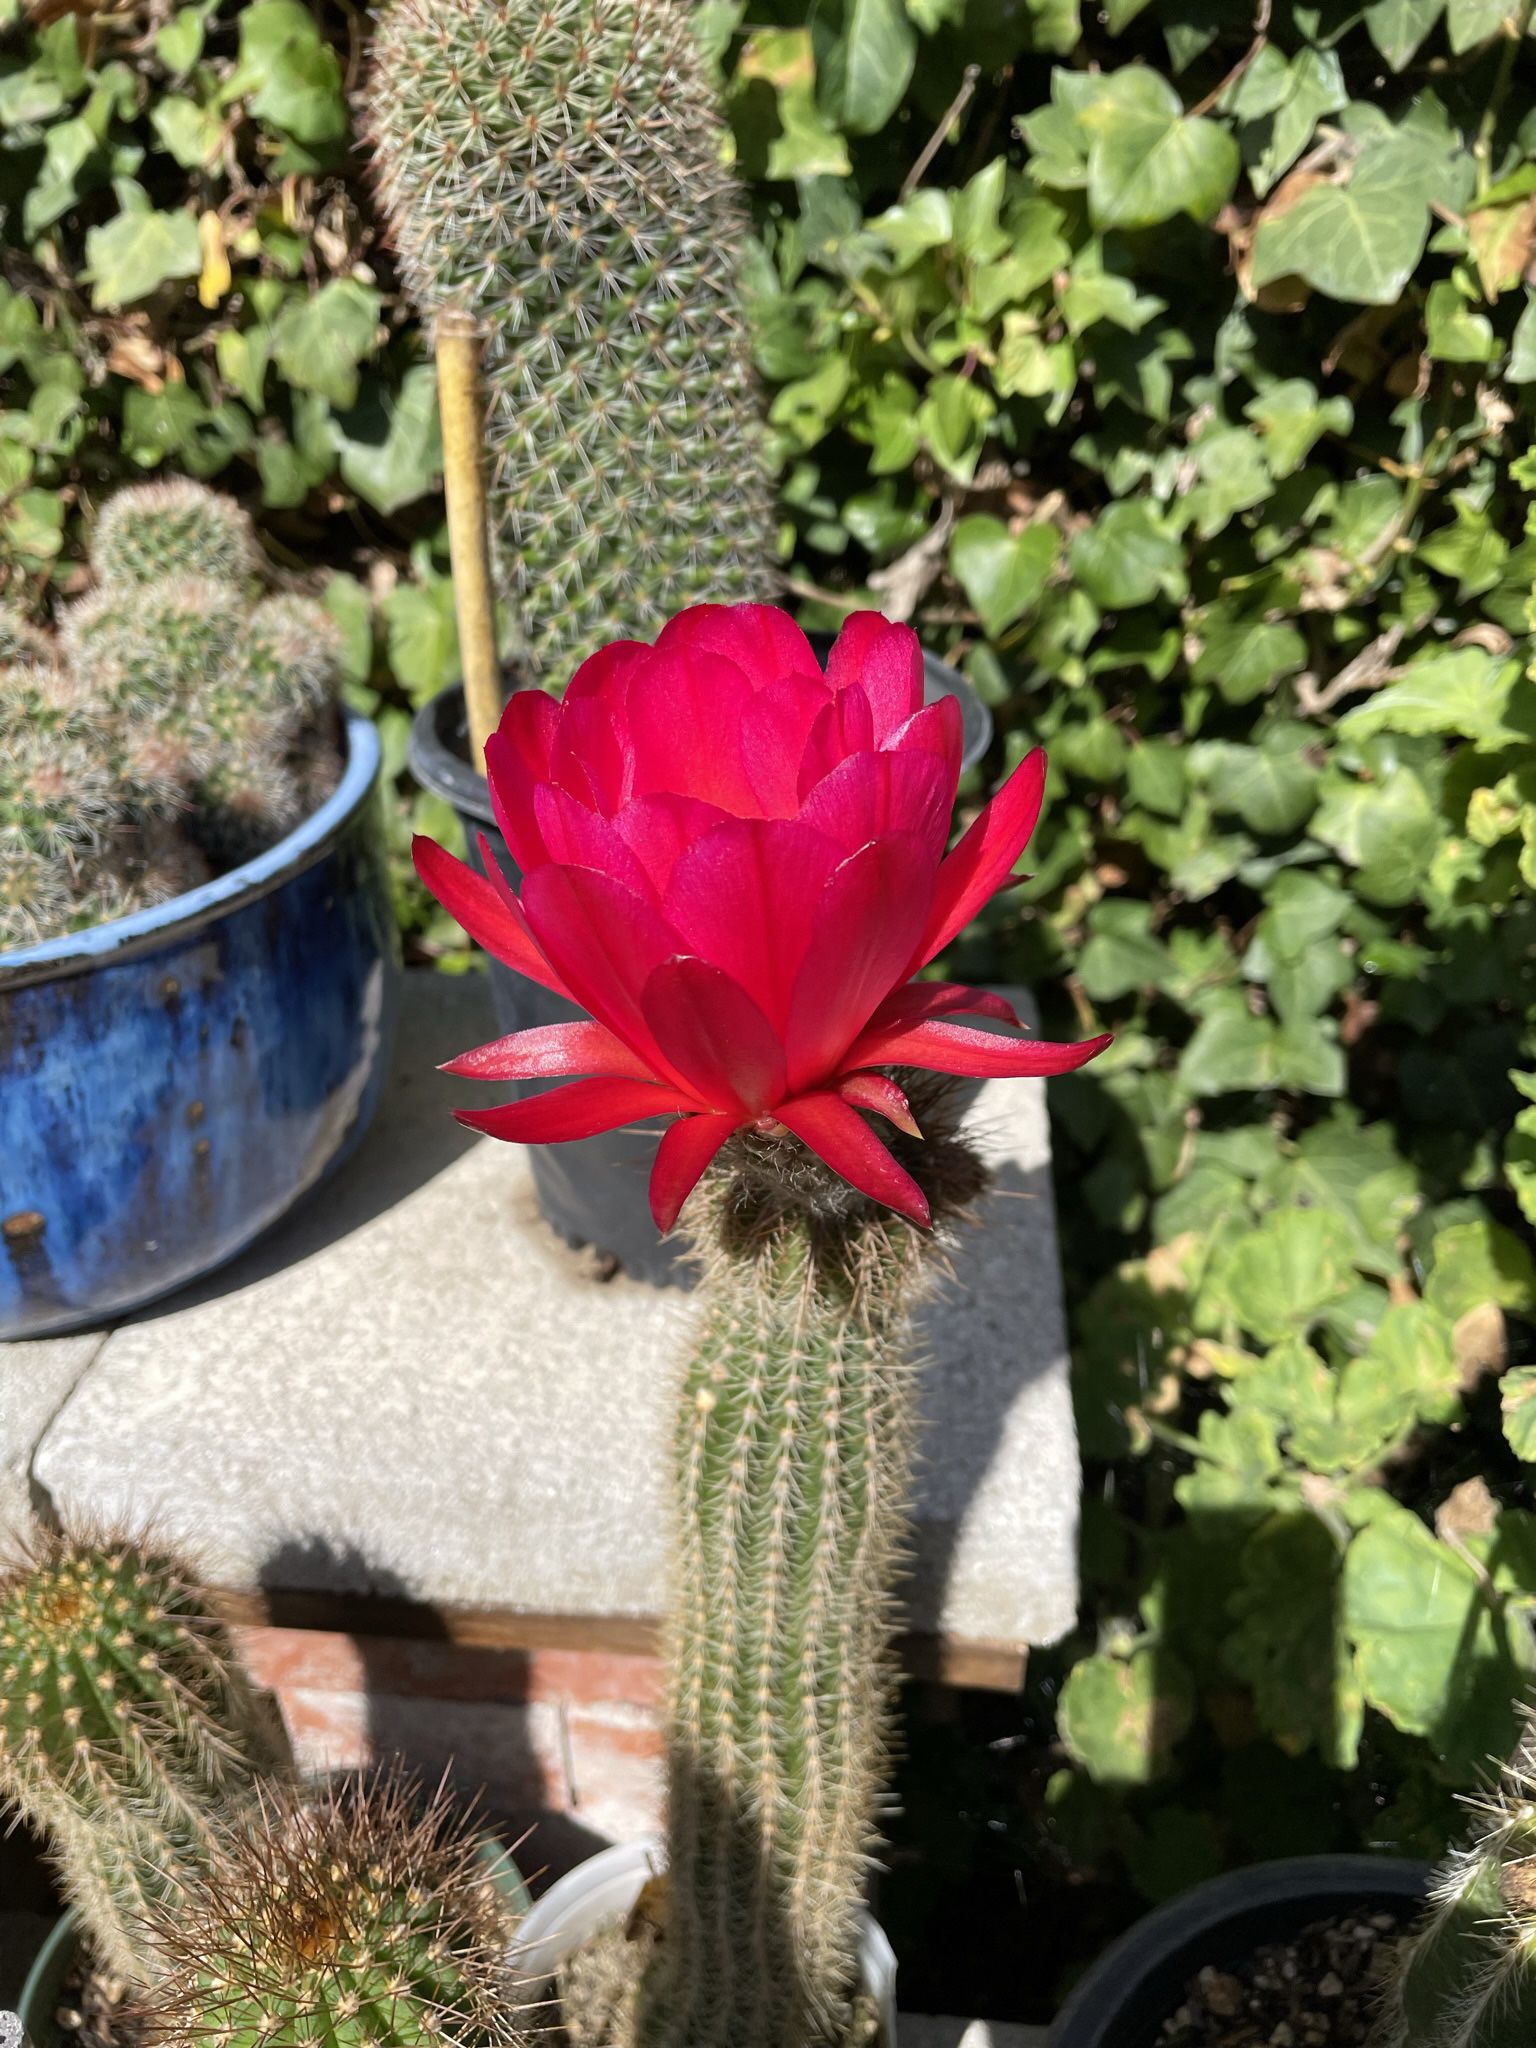 Saguaro Cactus Plant Pot